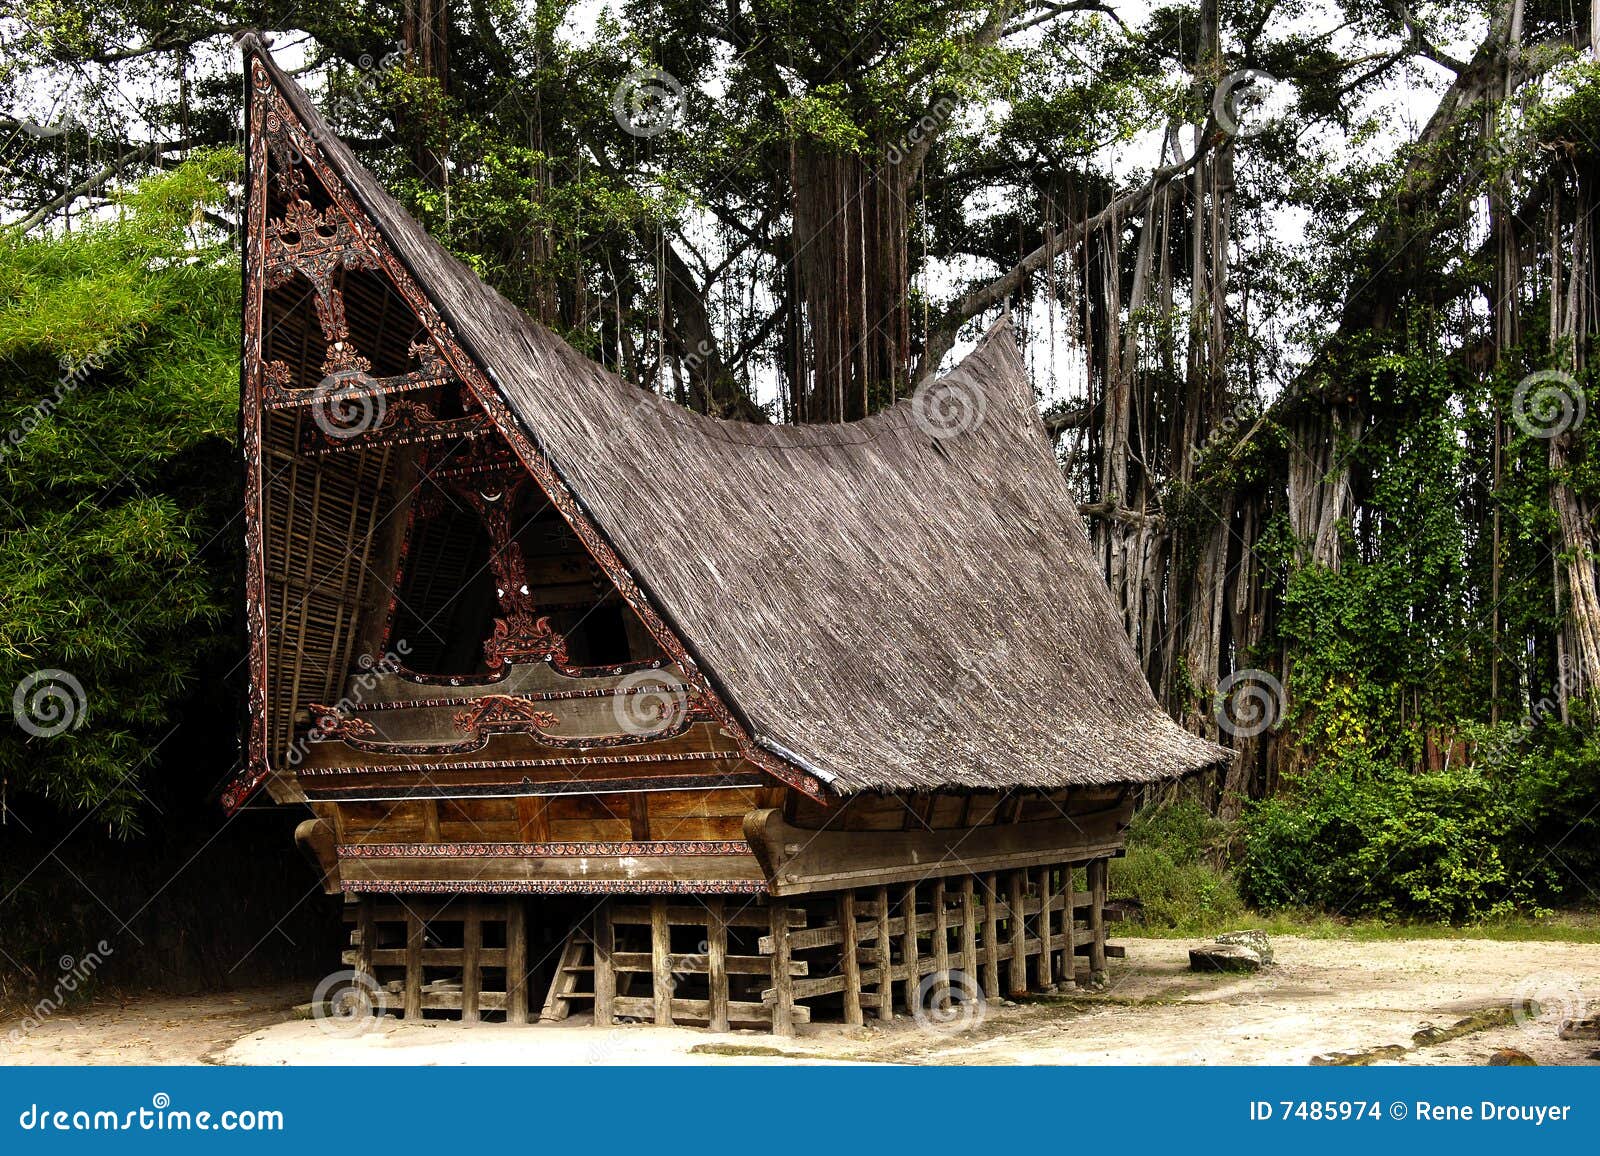 batak's house in sumatra